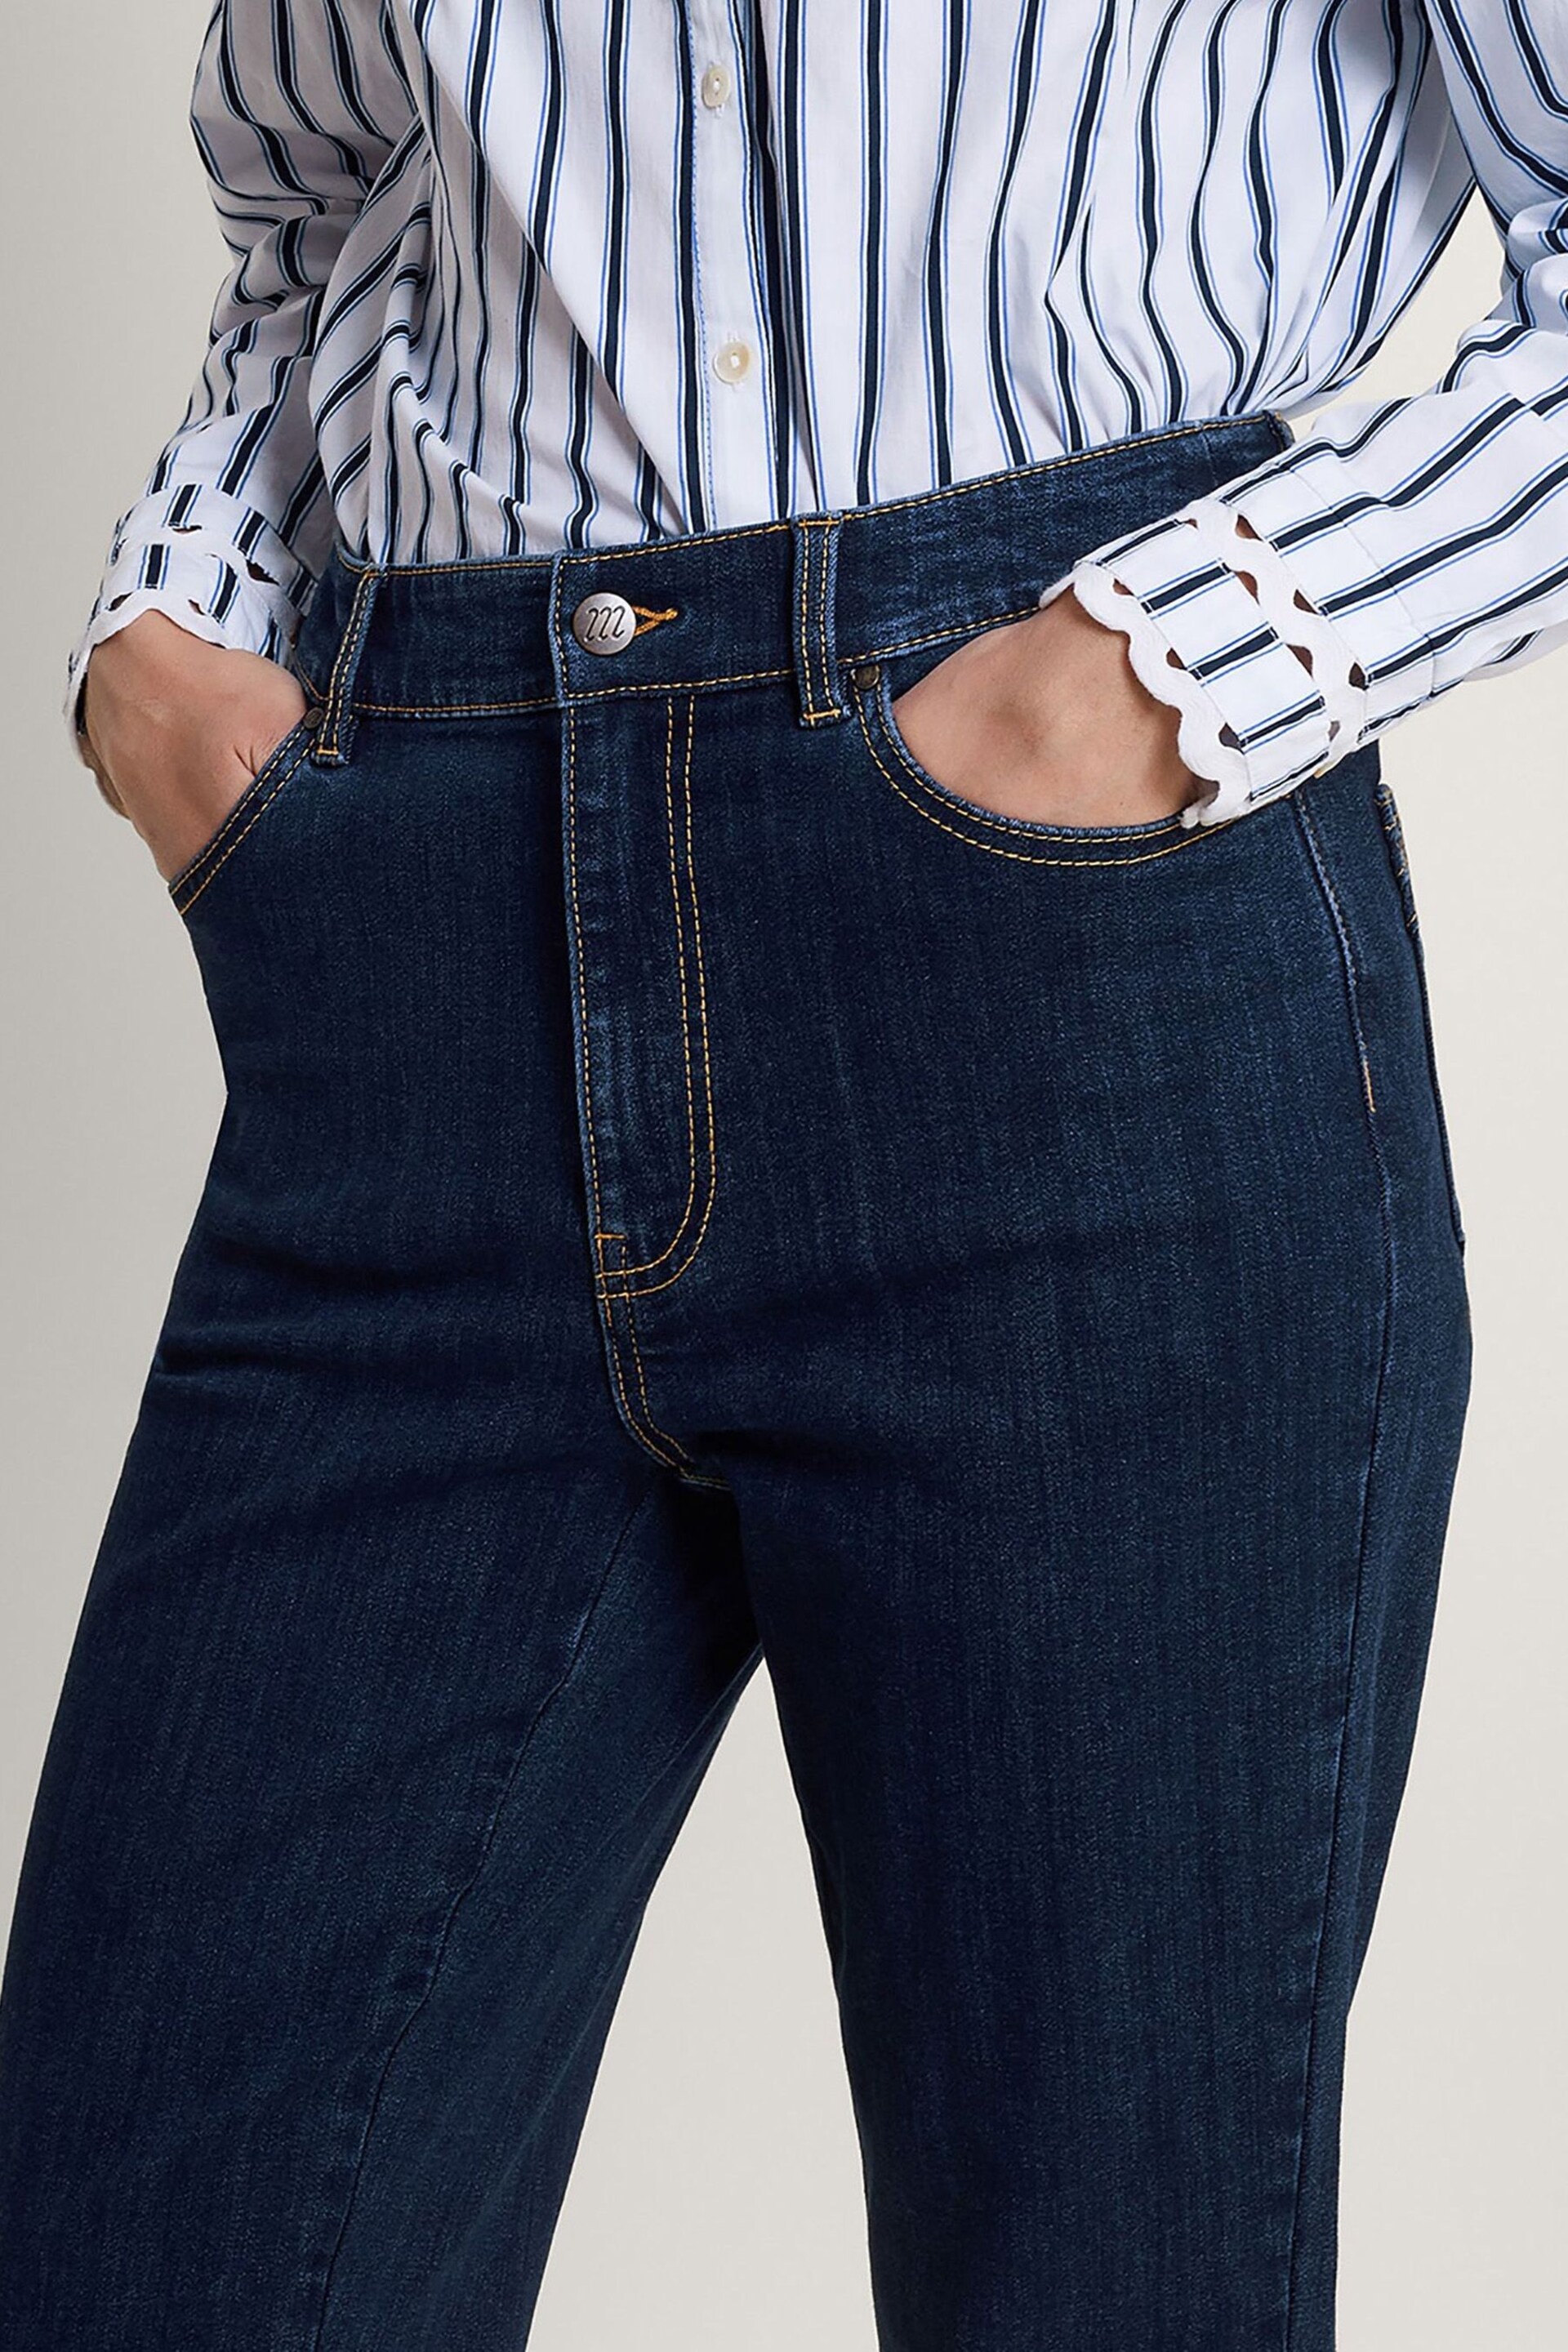 Monsoon Vera Slim Fit Jeans - Image 4 of 5